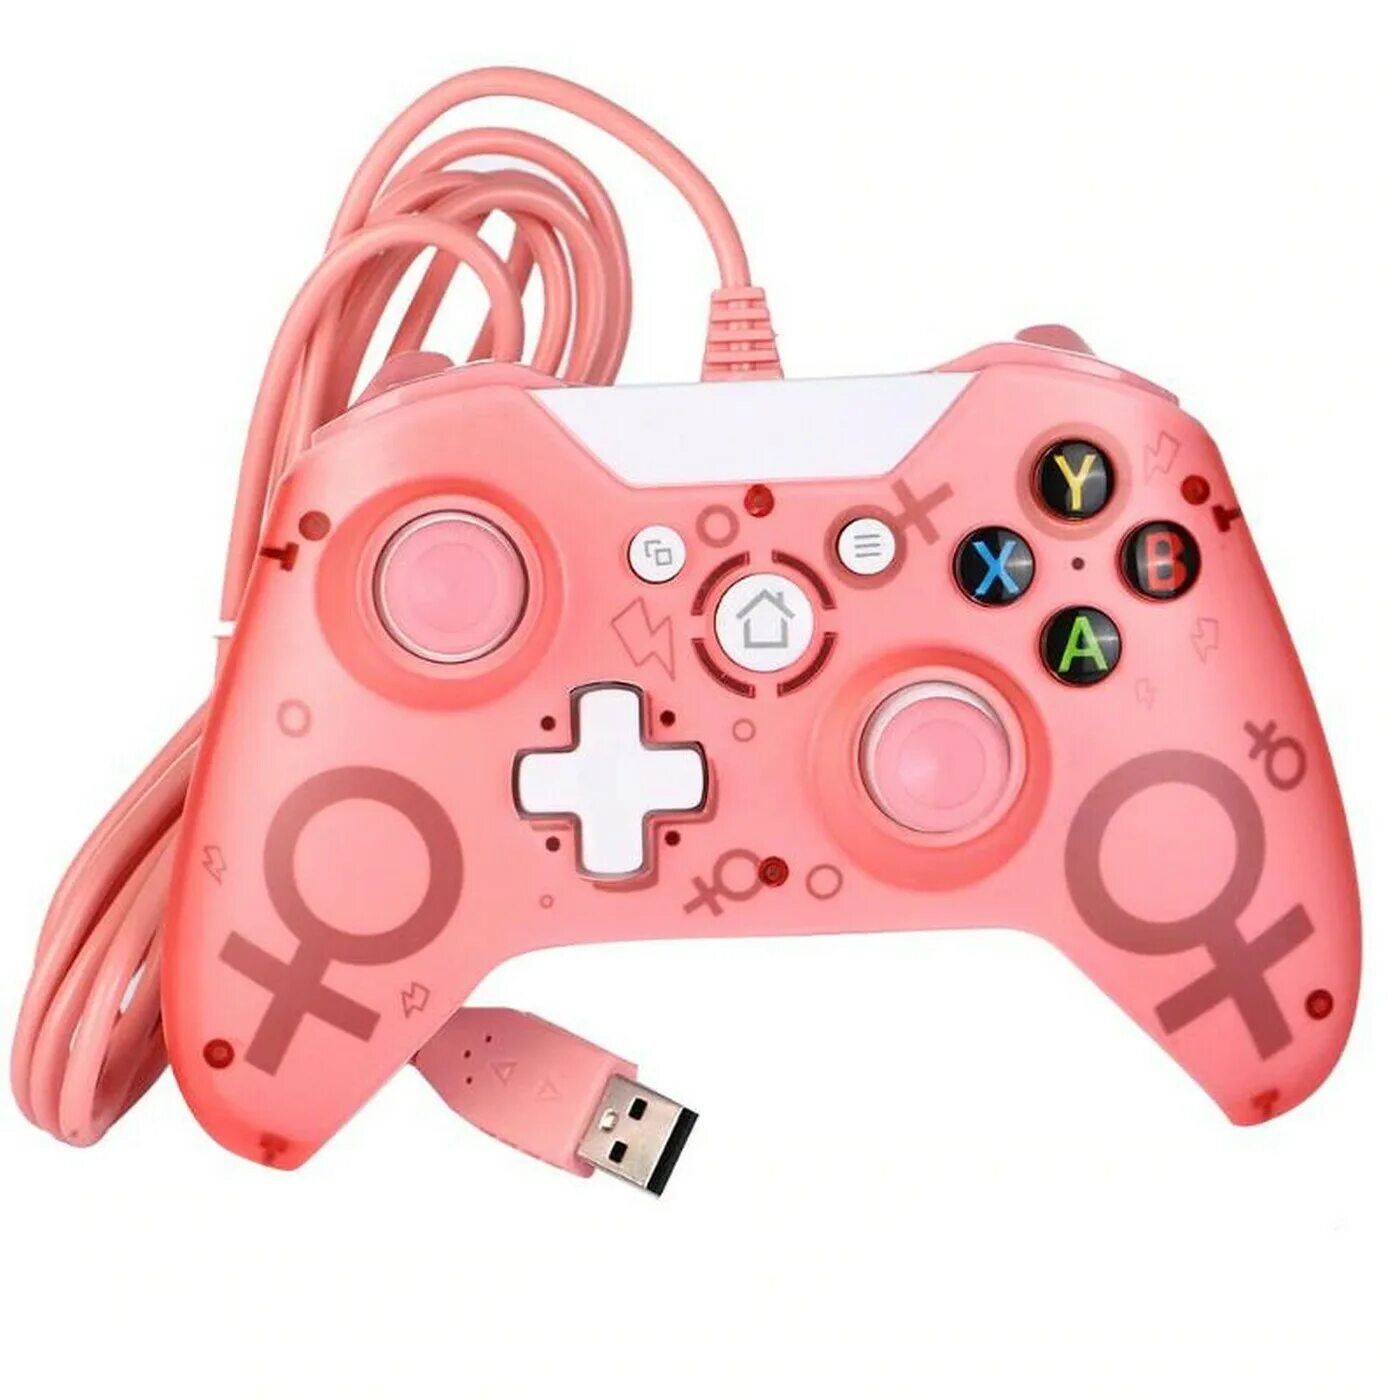 Геймпад Xbox розовый. Геймпад розовый ДНС. Розовый джойстик для Xbox one беспроводной. Геймпад Xbox one с розовыми кнопками. Розовый джойстик